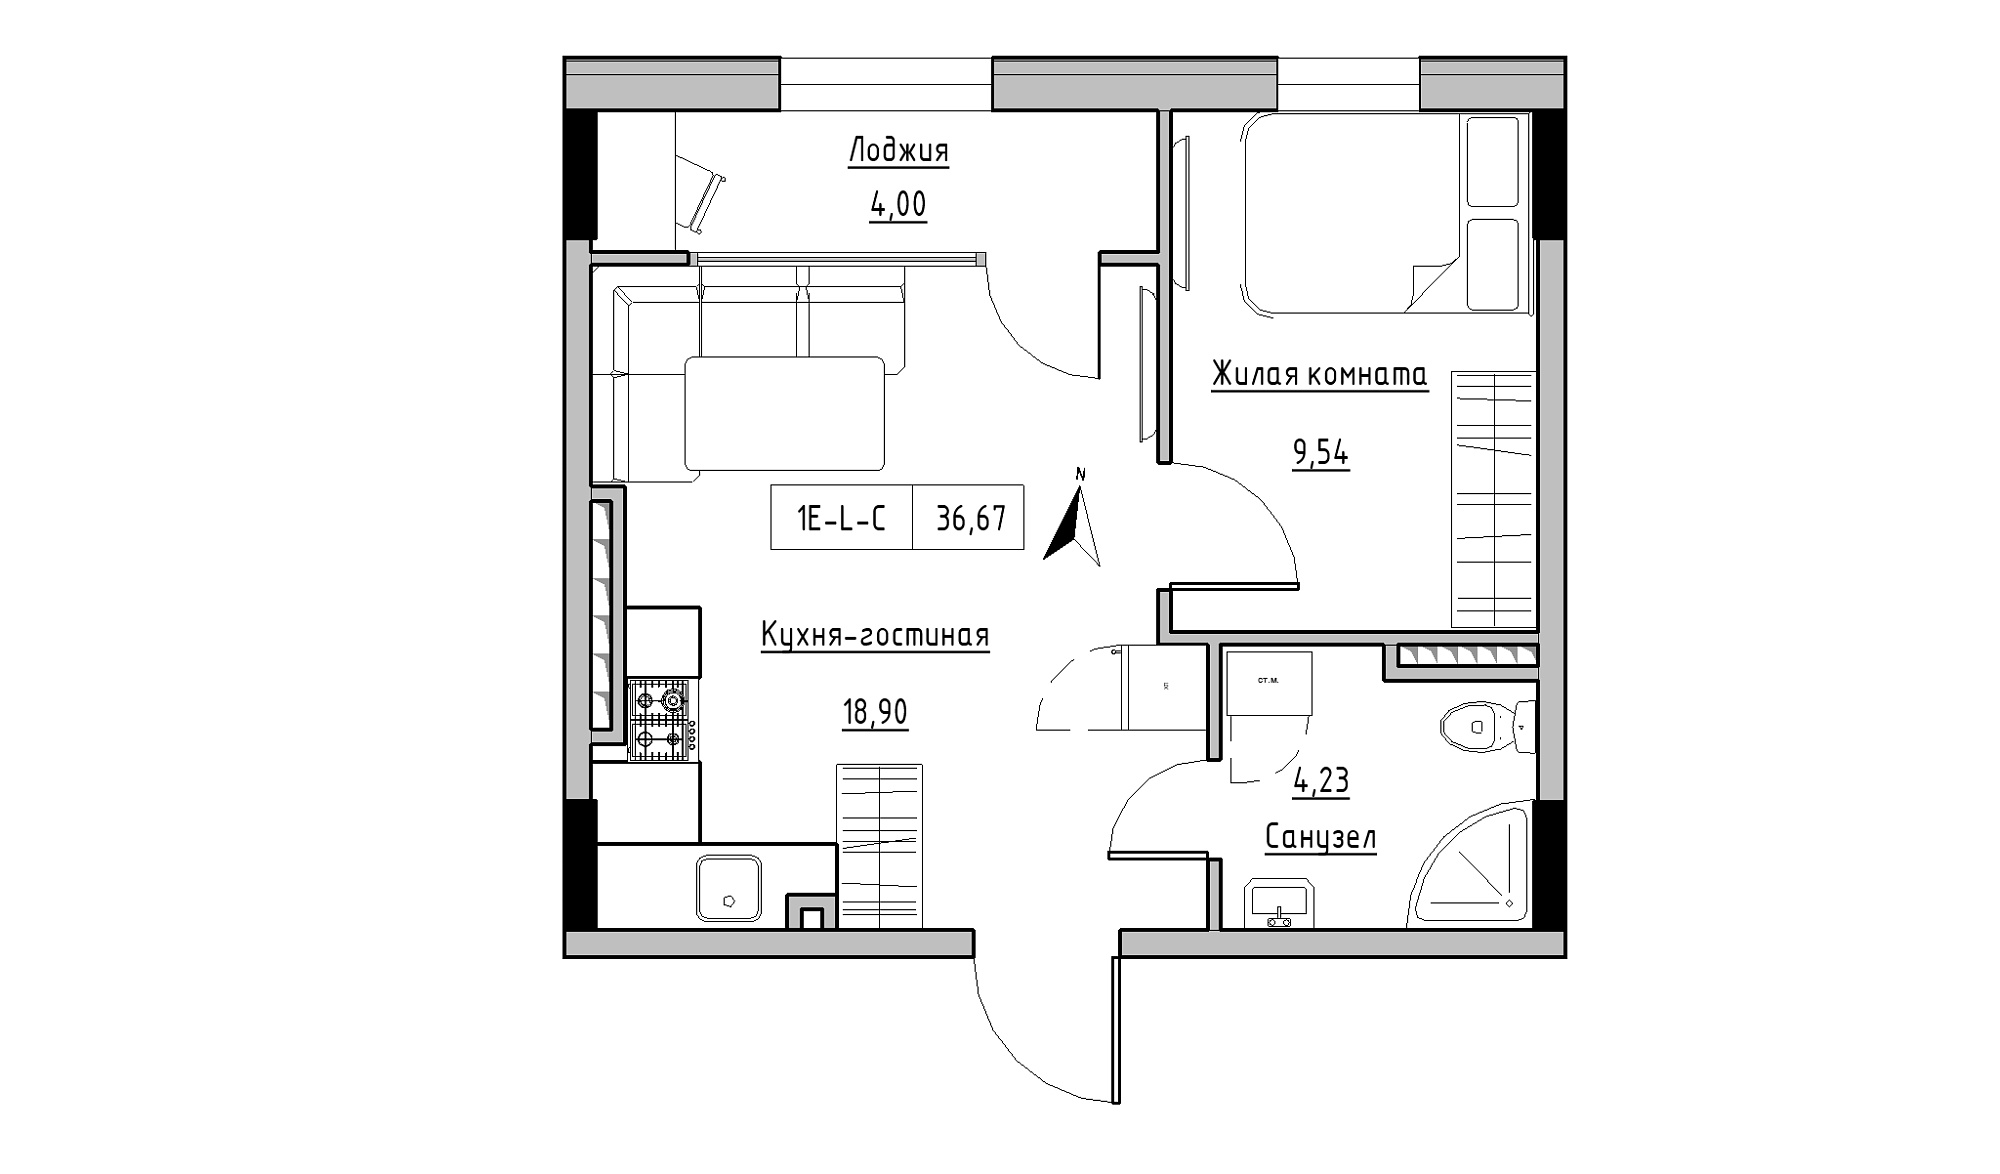 Planning 1-rm flats area 36.67m2, KS-025-05/0008.